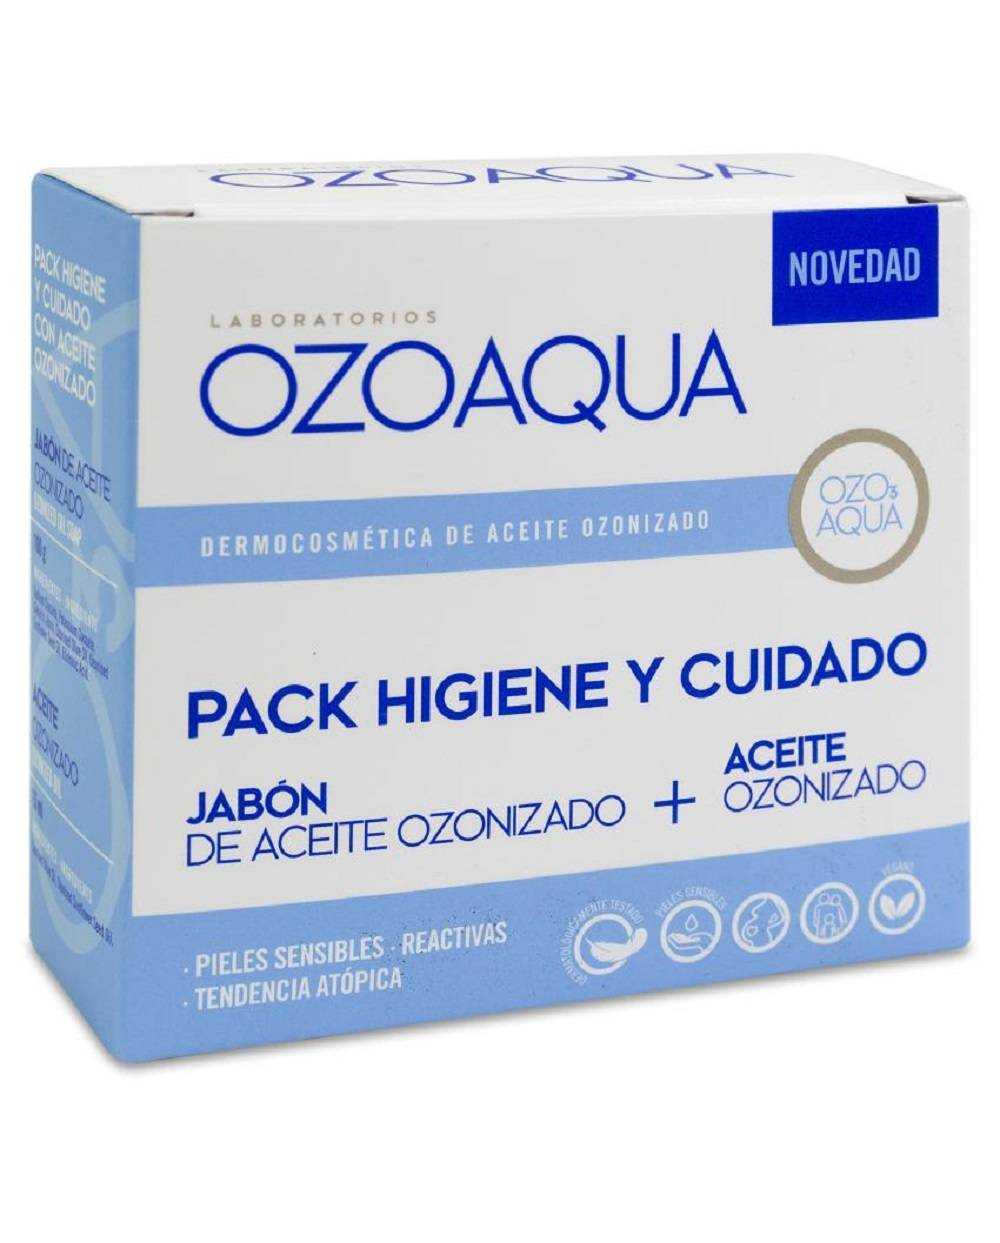 Pack Ozoaqua aceite ozonizado + jabón